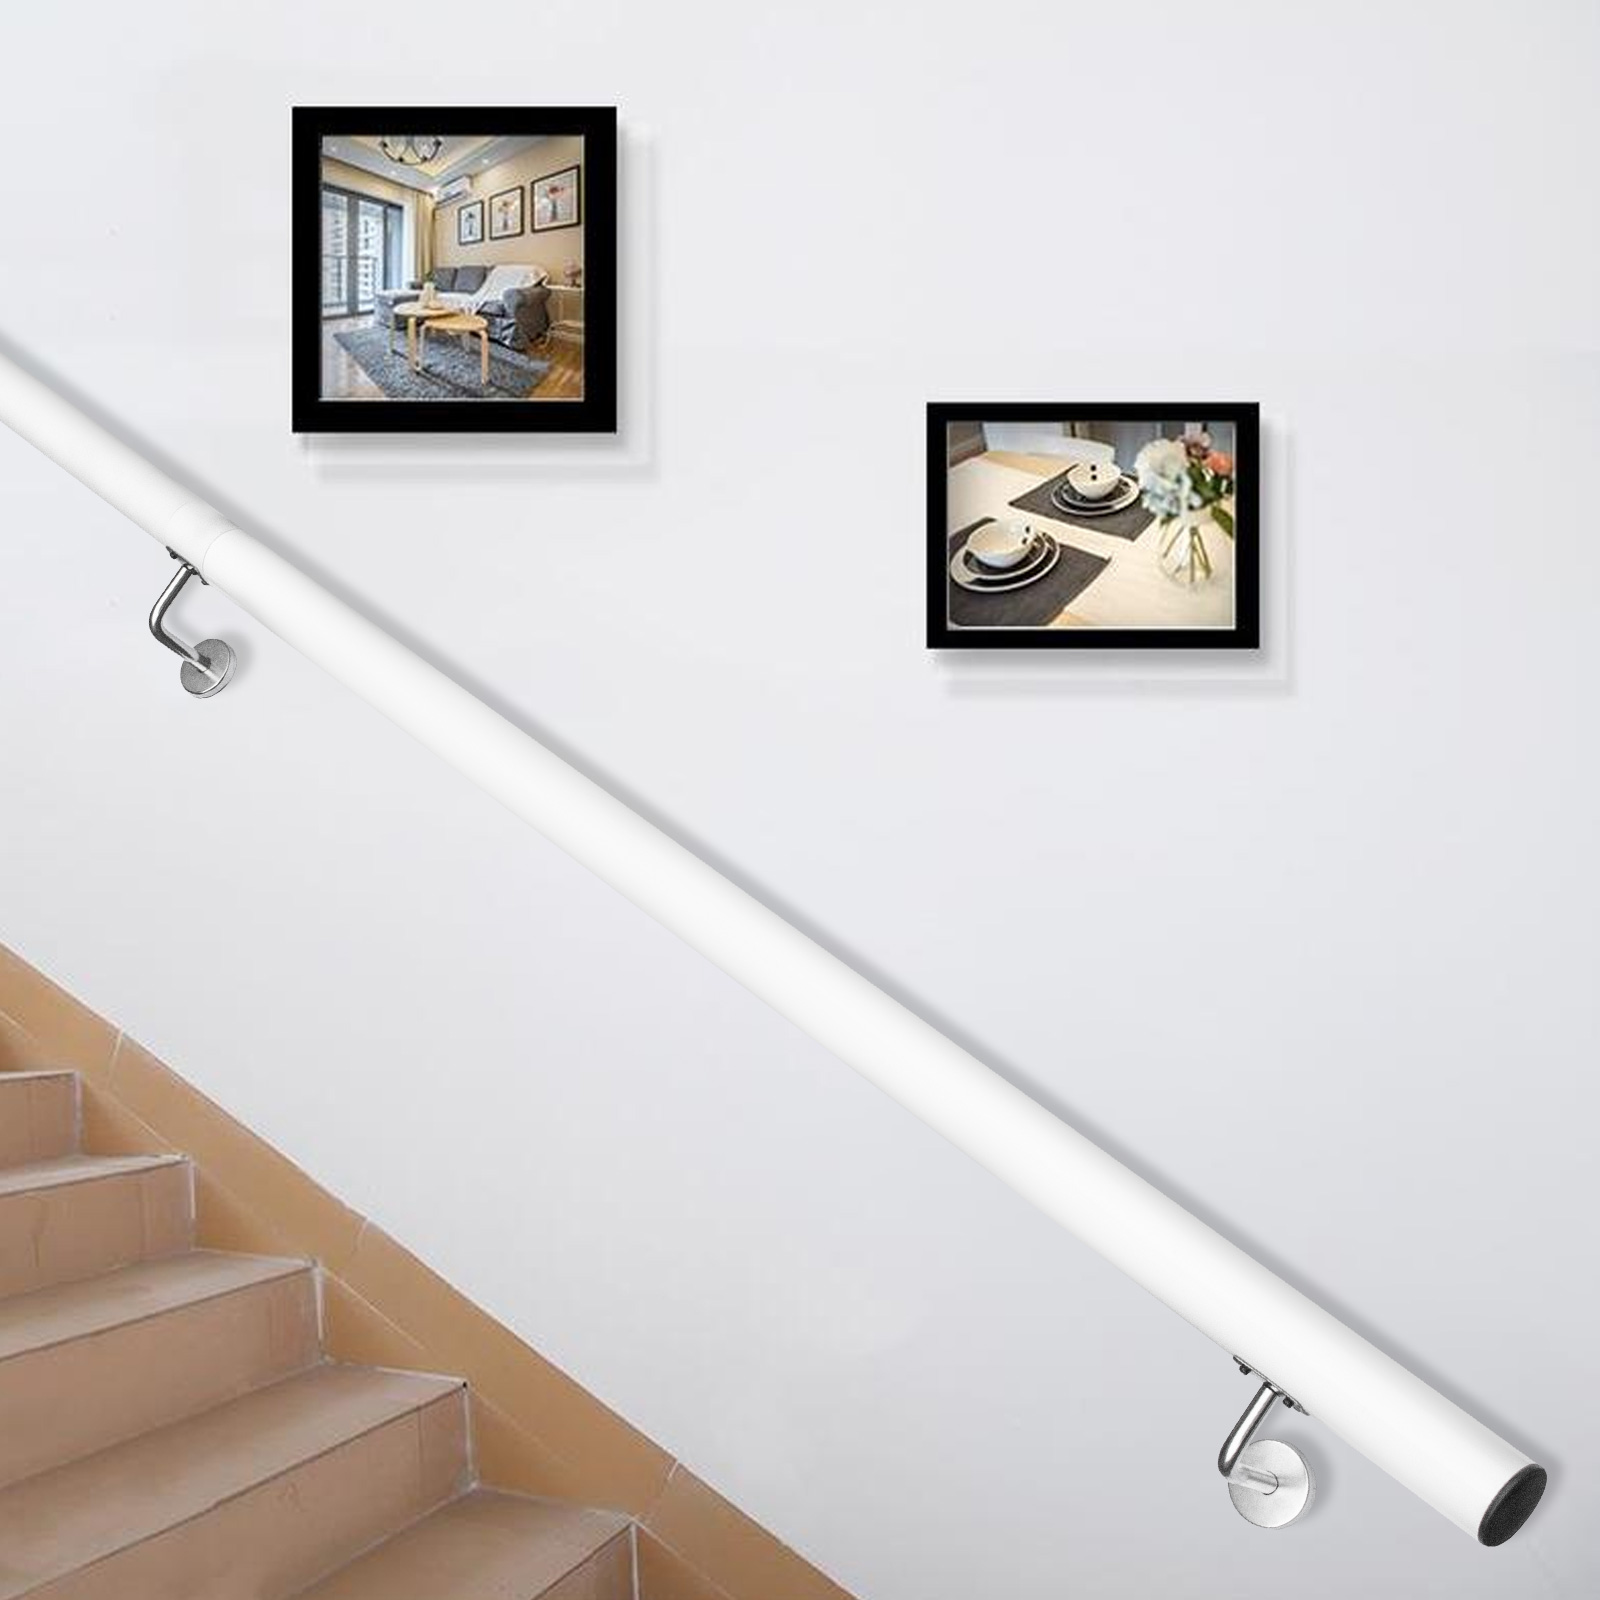 Stair Handrail Stair Rail Aluminum Modern Handrail For Stairs 12ft Length White от Vevor Many GEOs